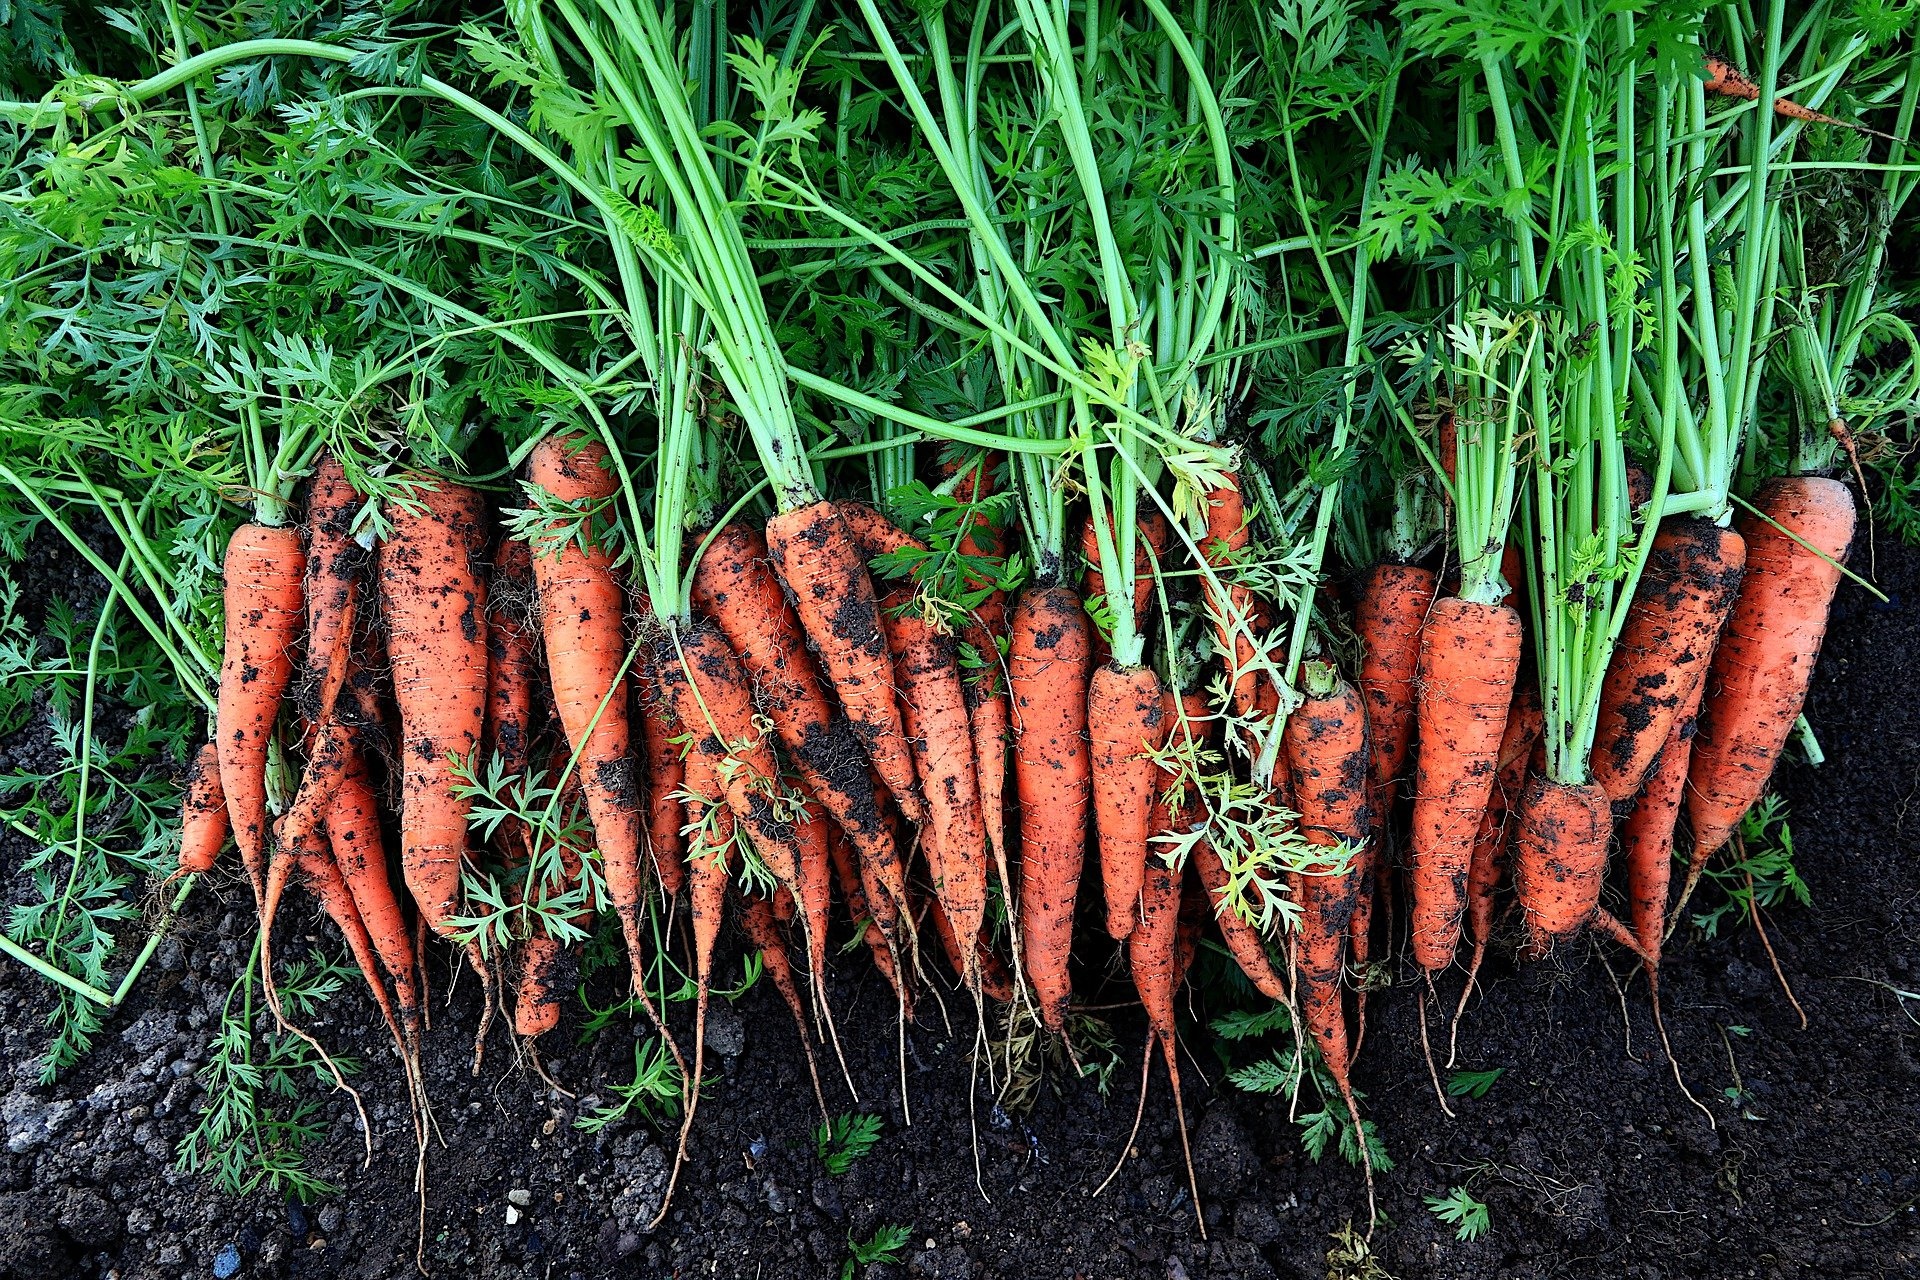 carrots image